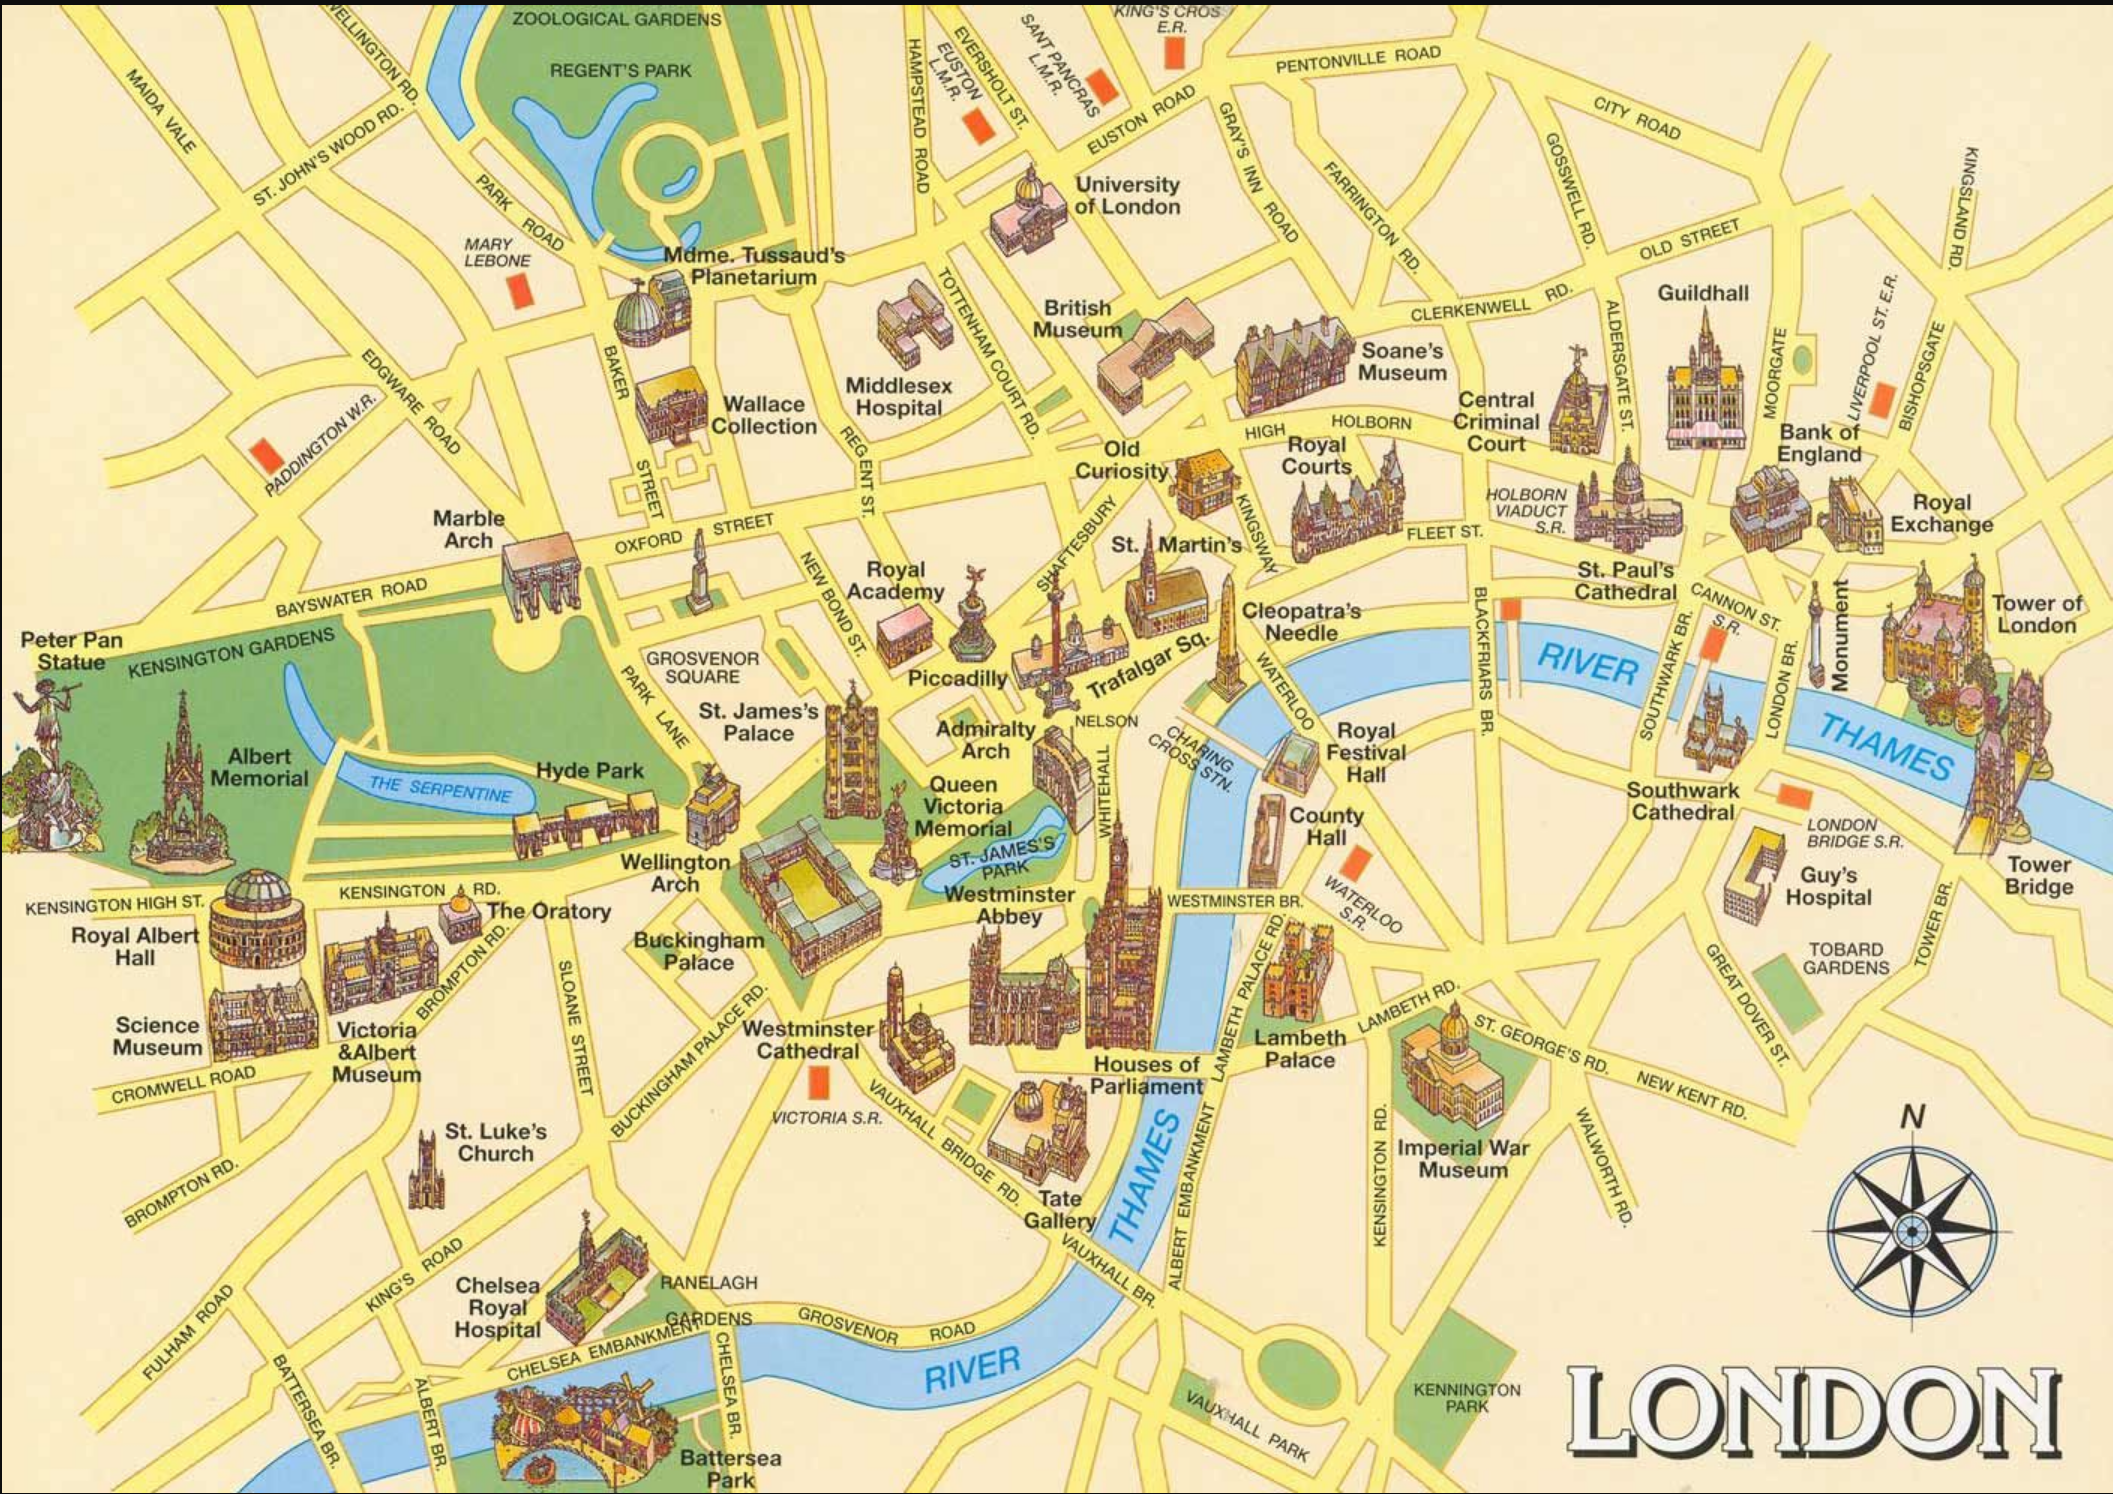 LondonTouristMap-20230220